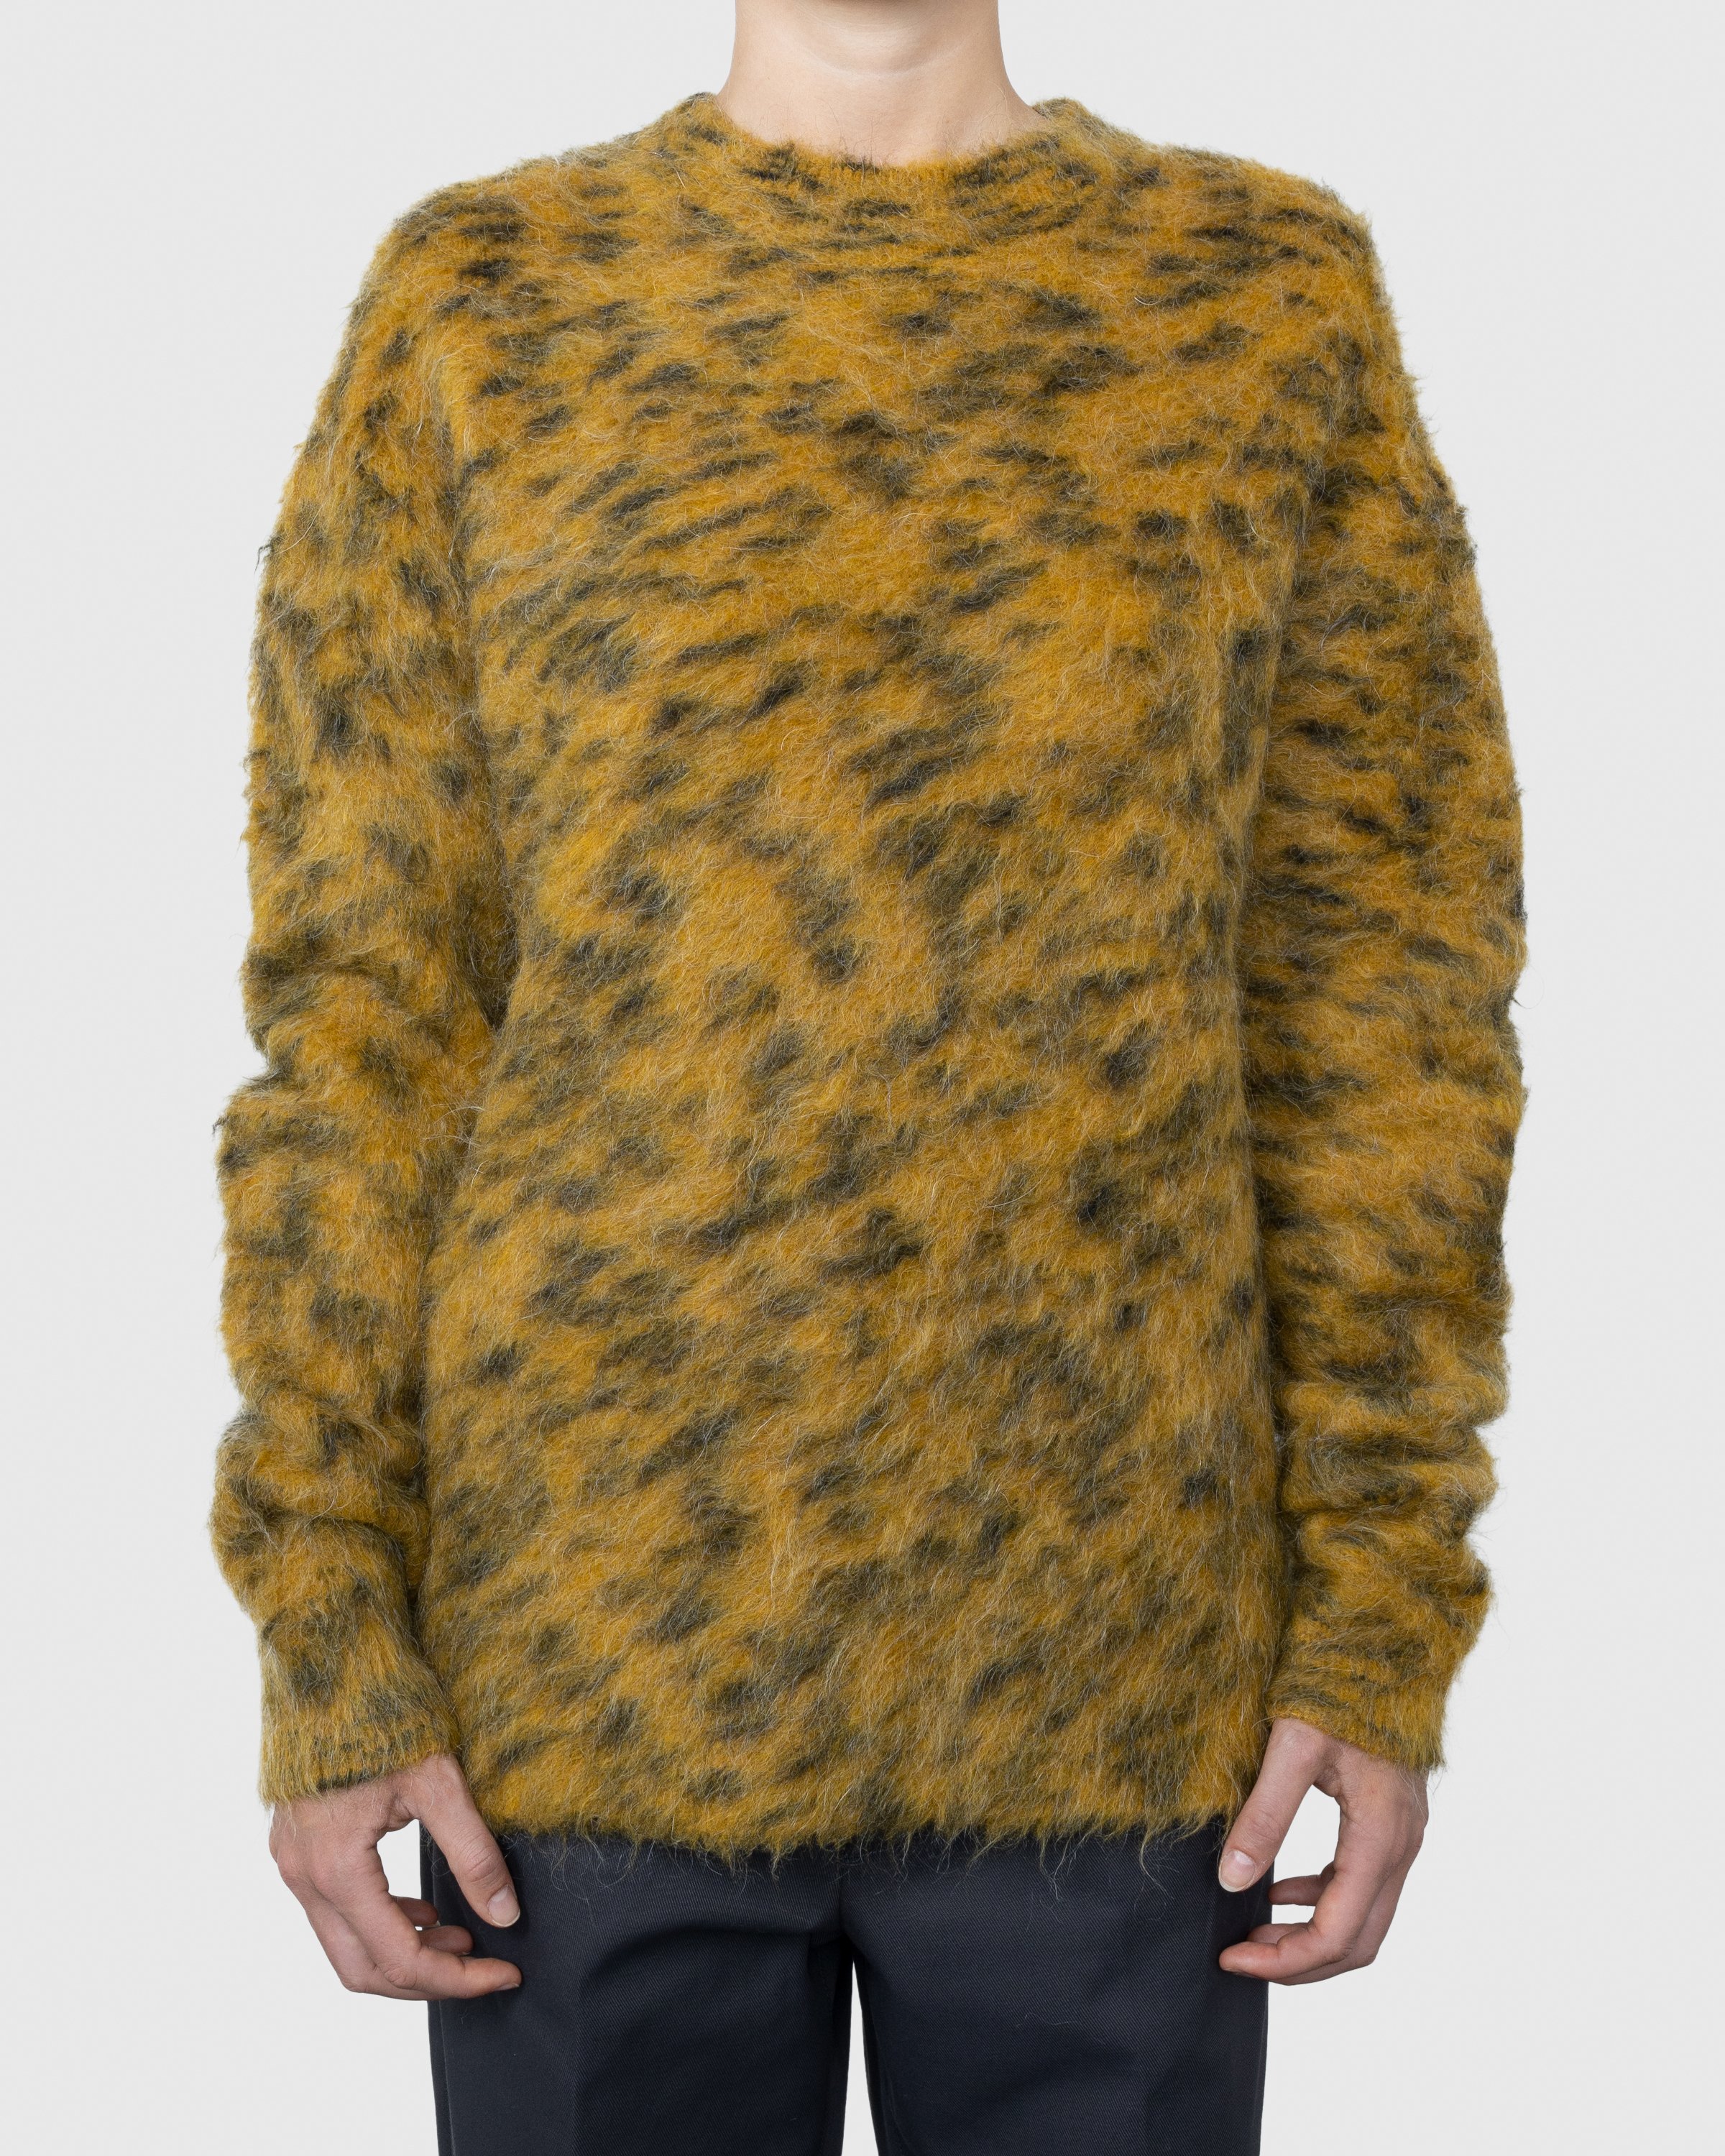 Acne Studios - Hairy Crewneck Sweater Yellow - Clothing - Yellow - Image 2